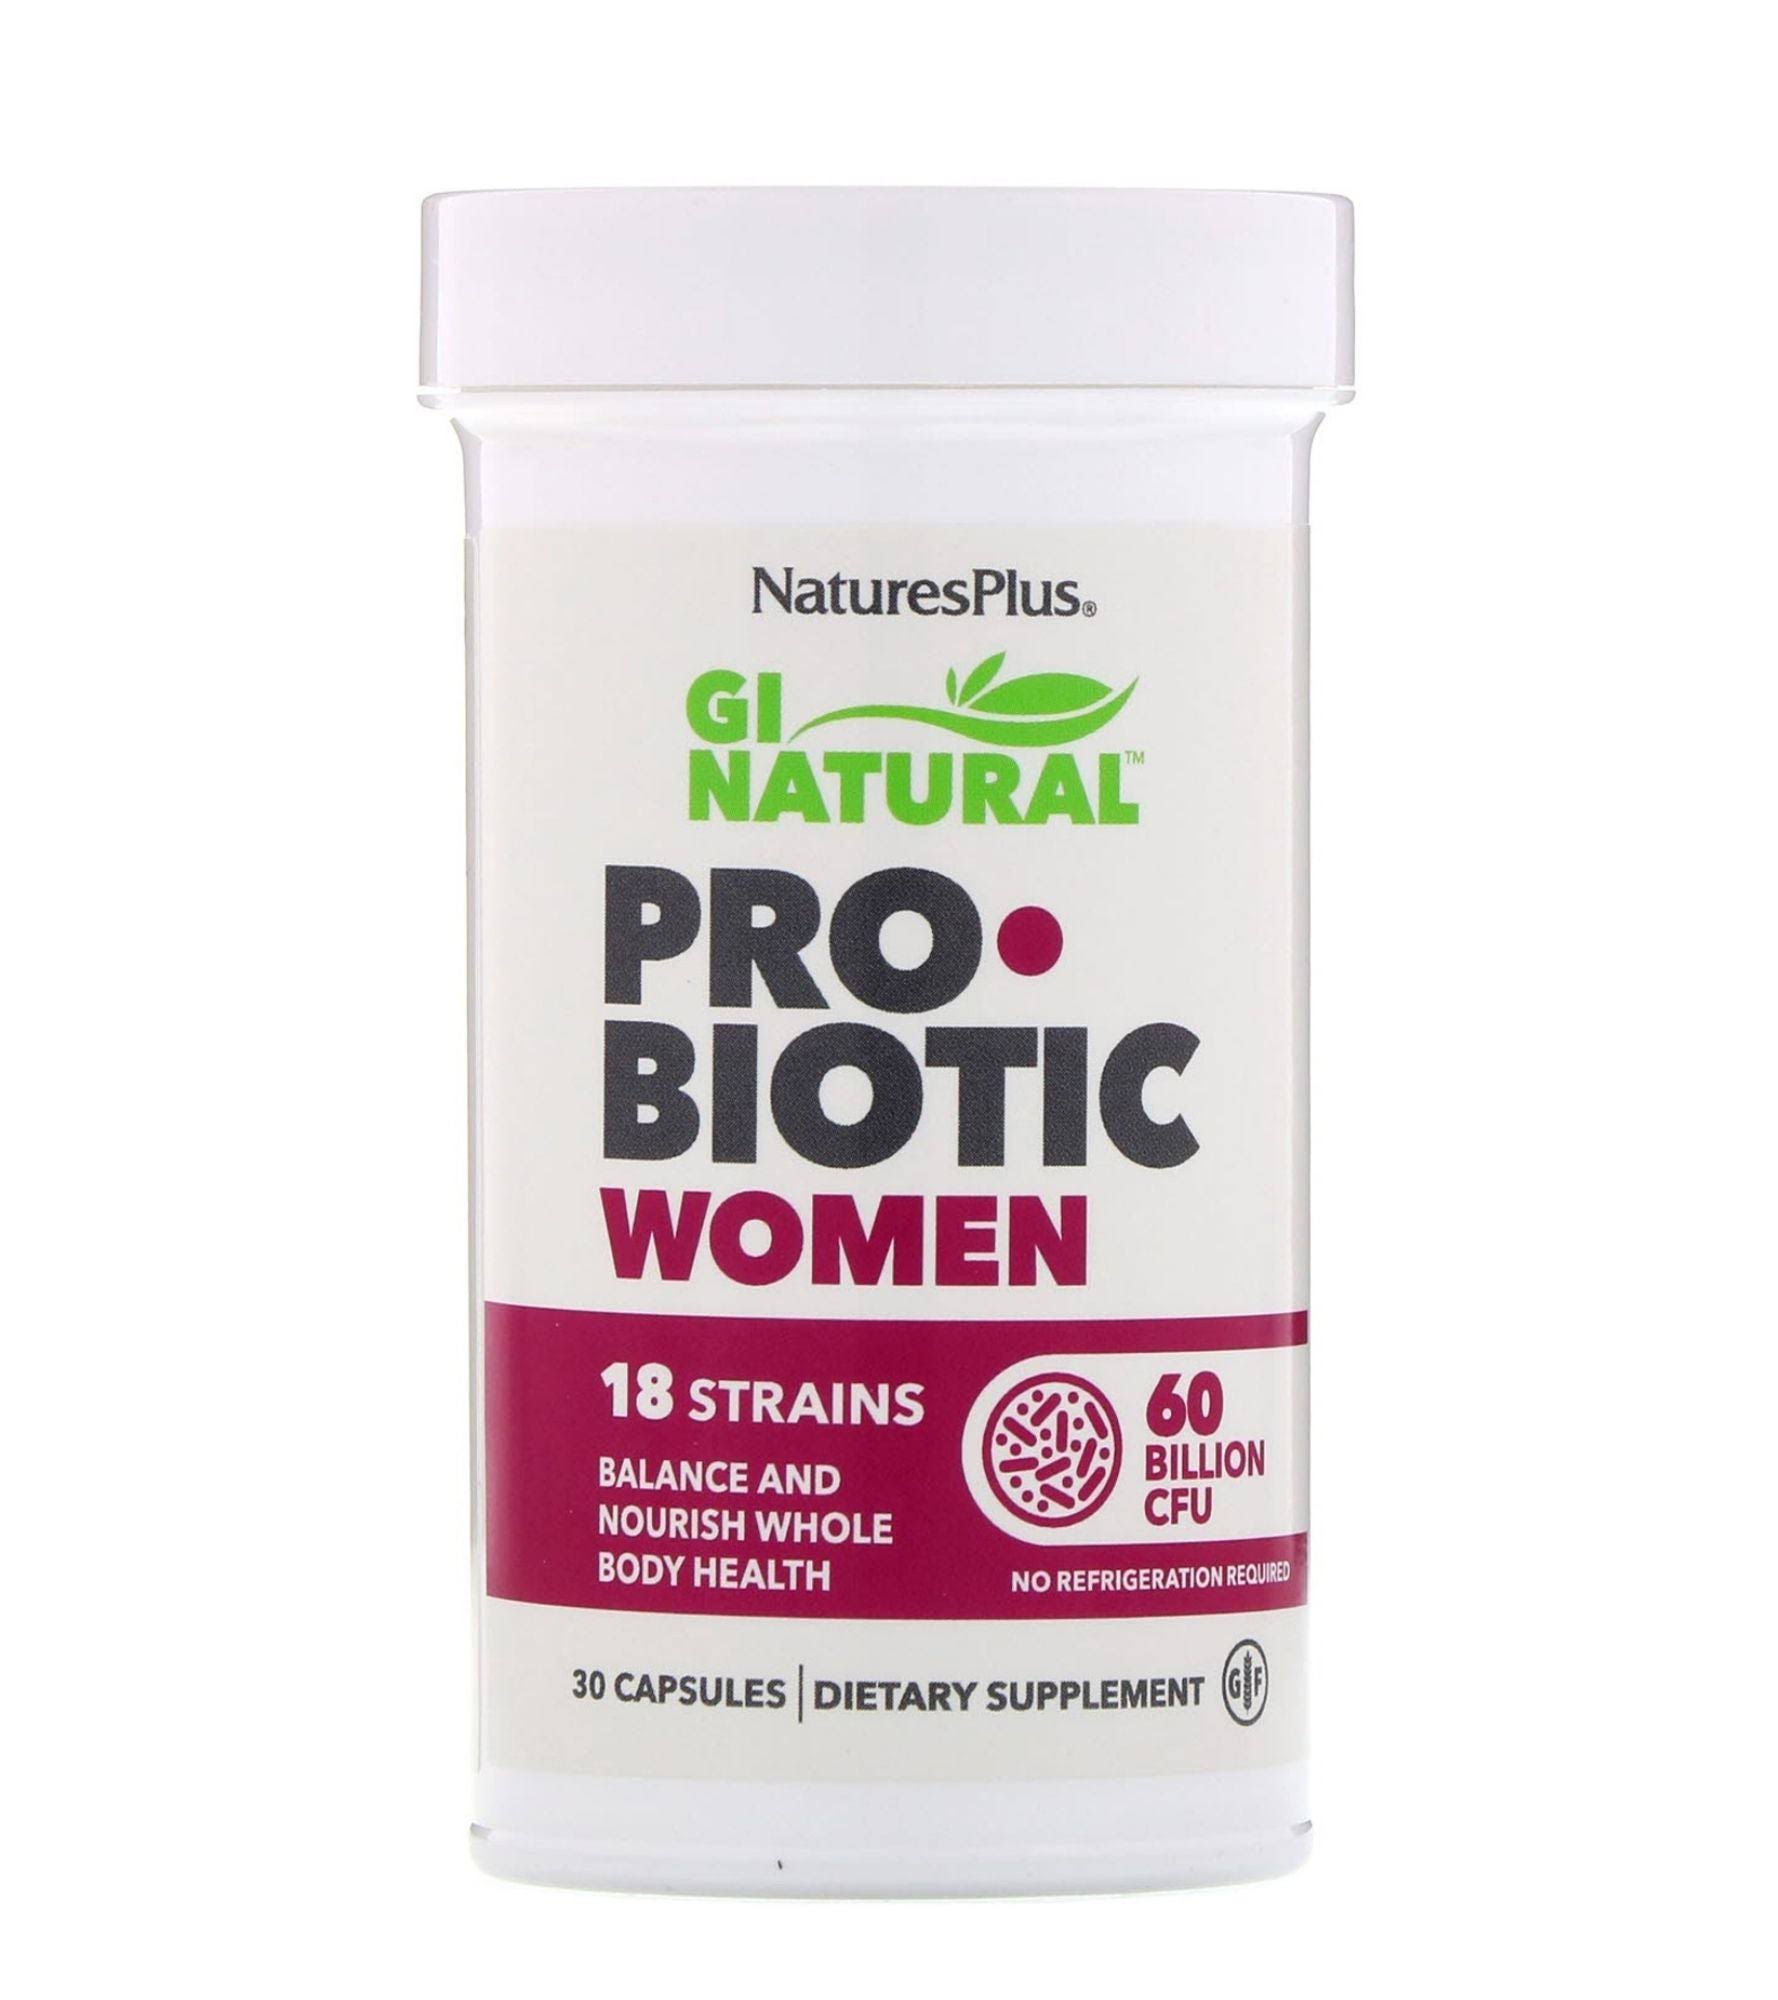 Nature's Plus Gi Natural Probiotic Women 60 Billion CFU 30 Capsules